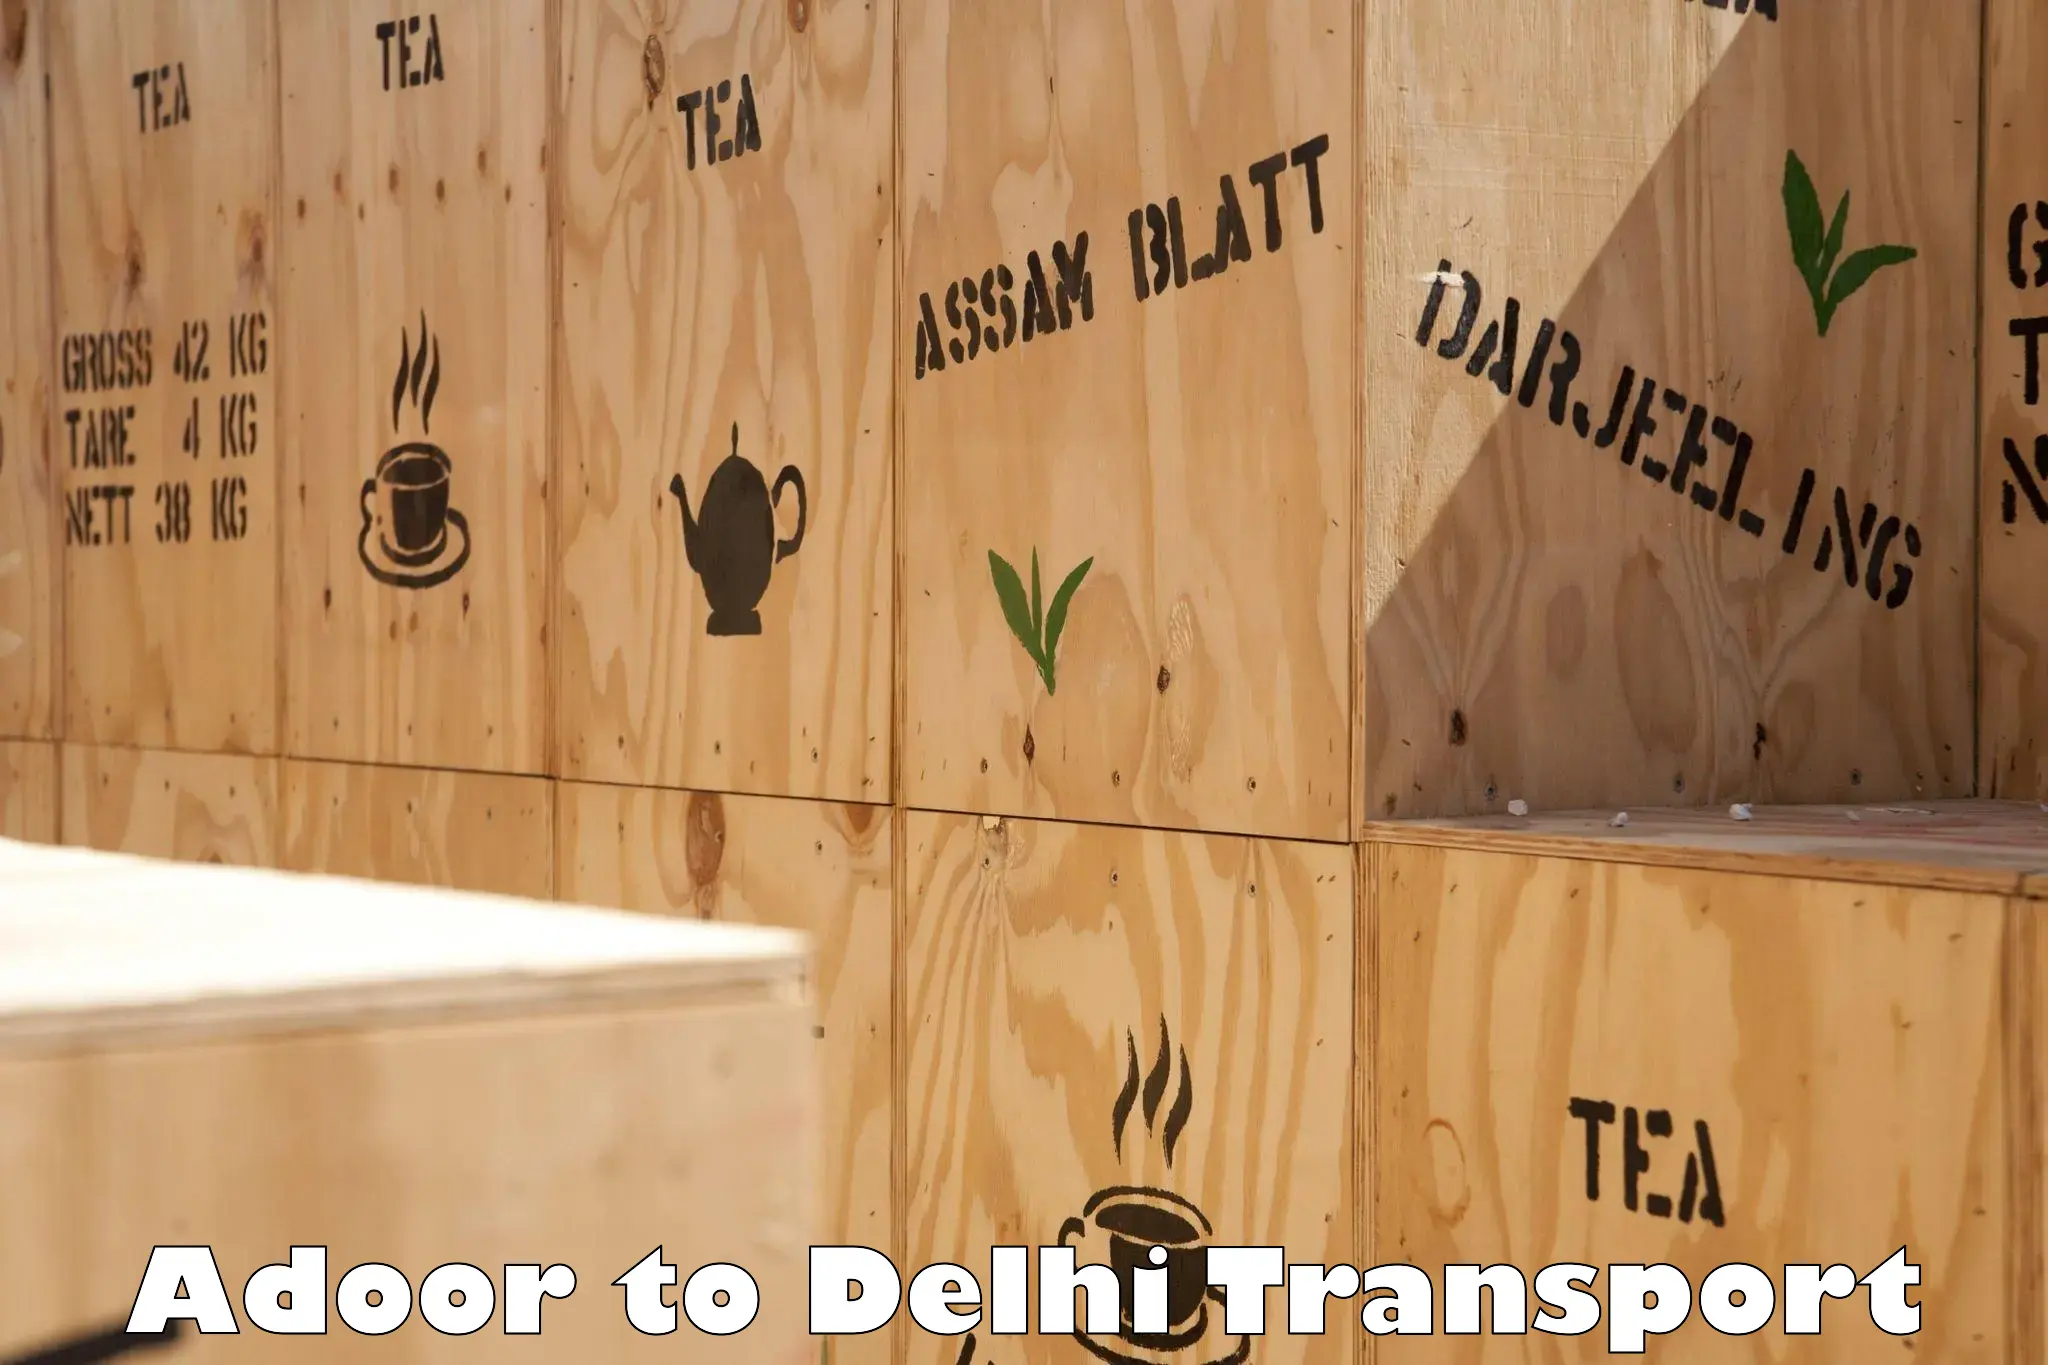 Daily transport service Adoor to East Delhi